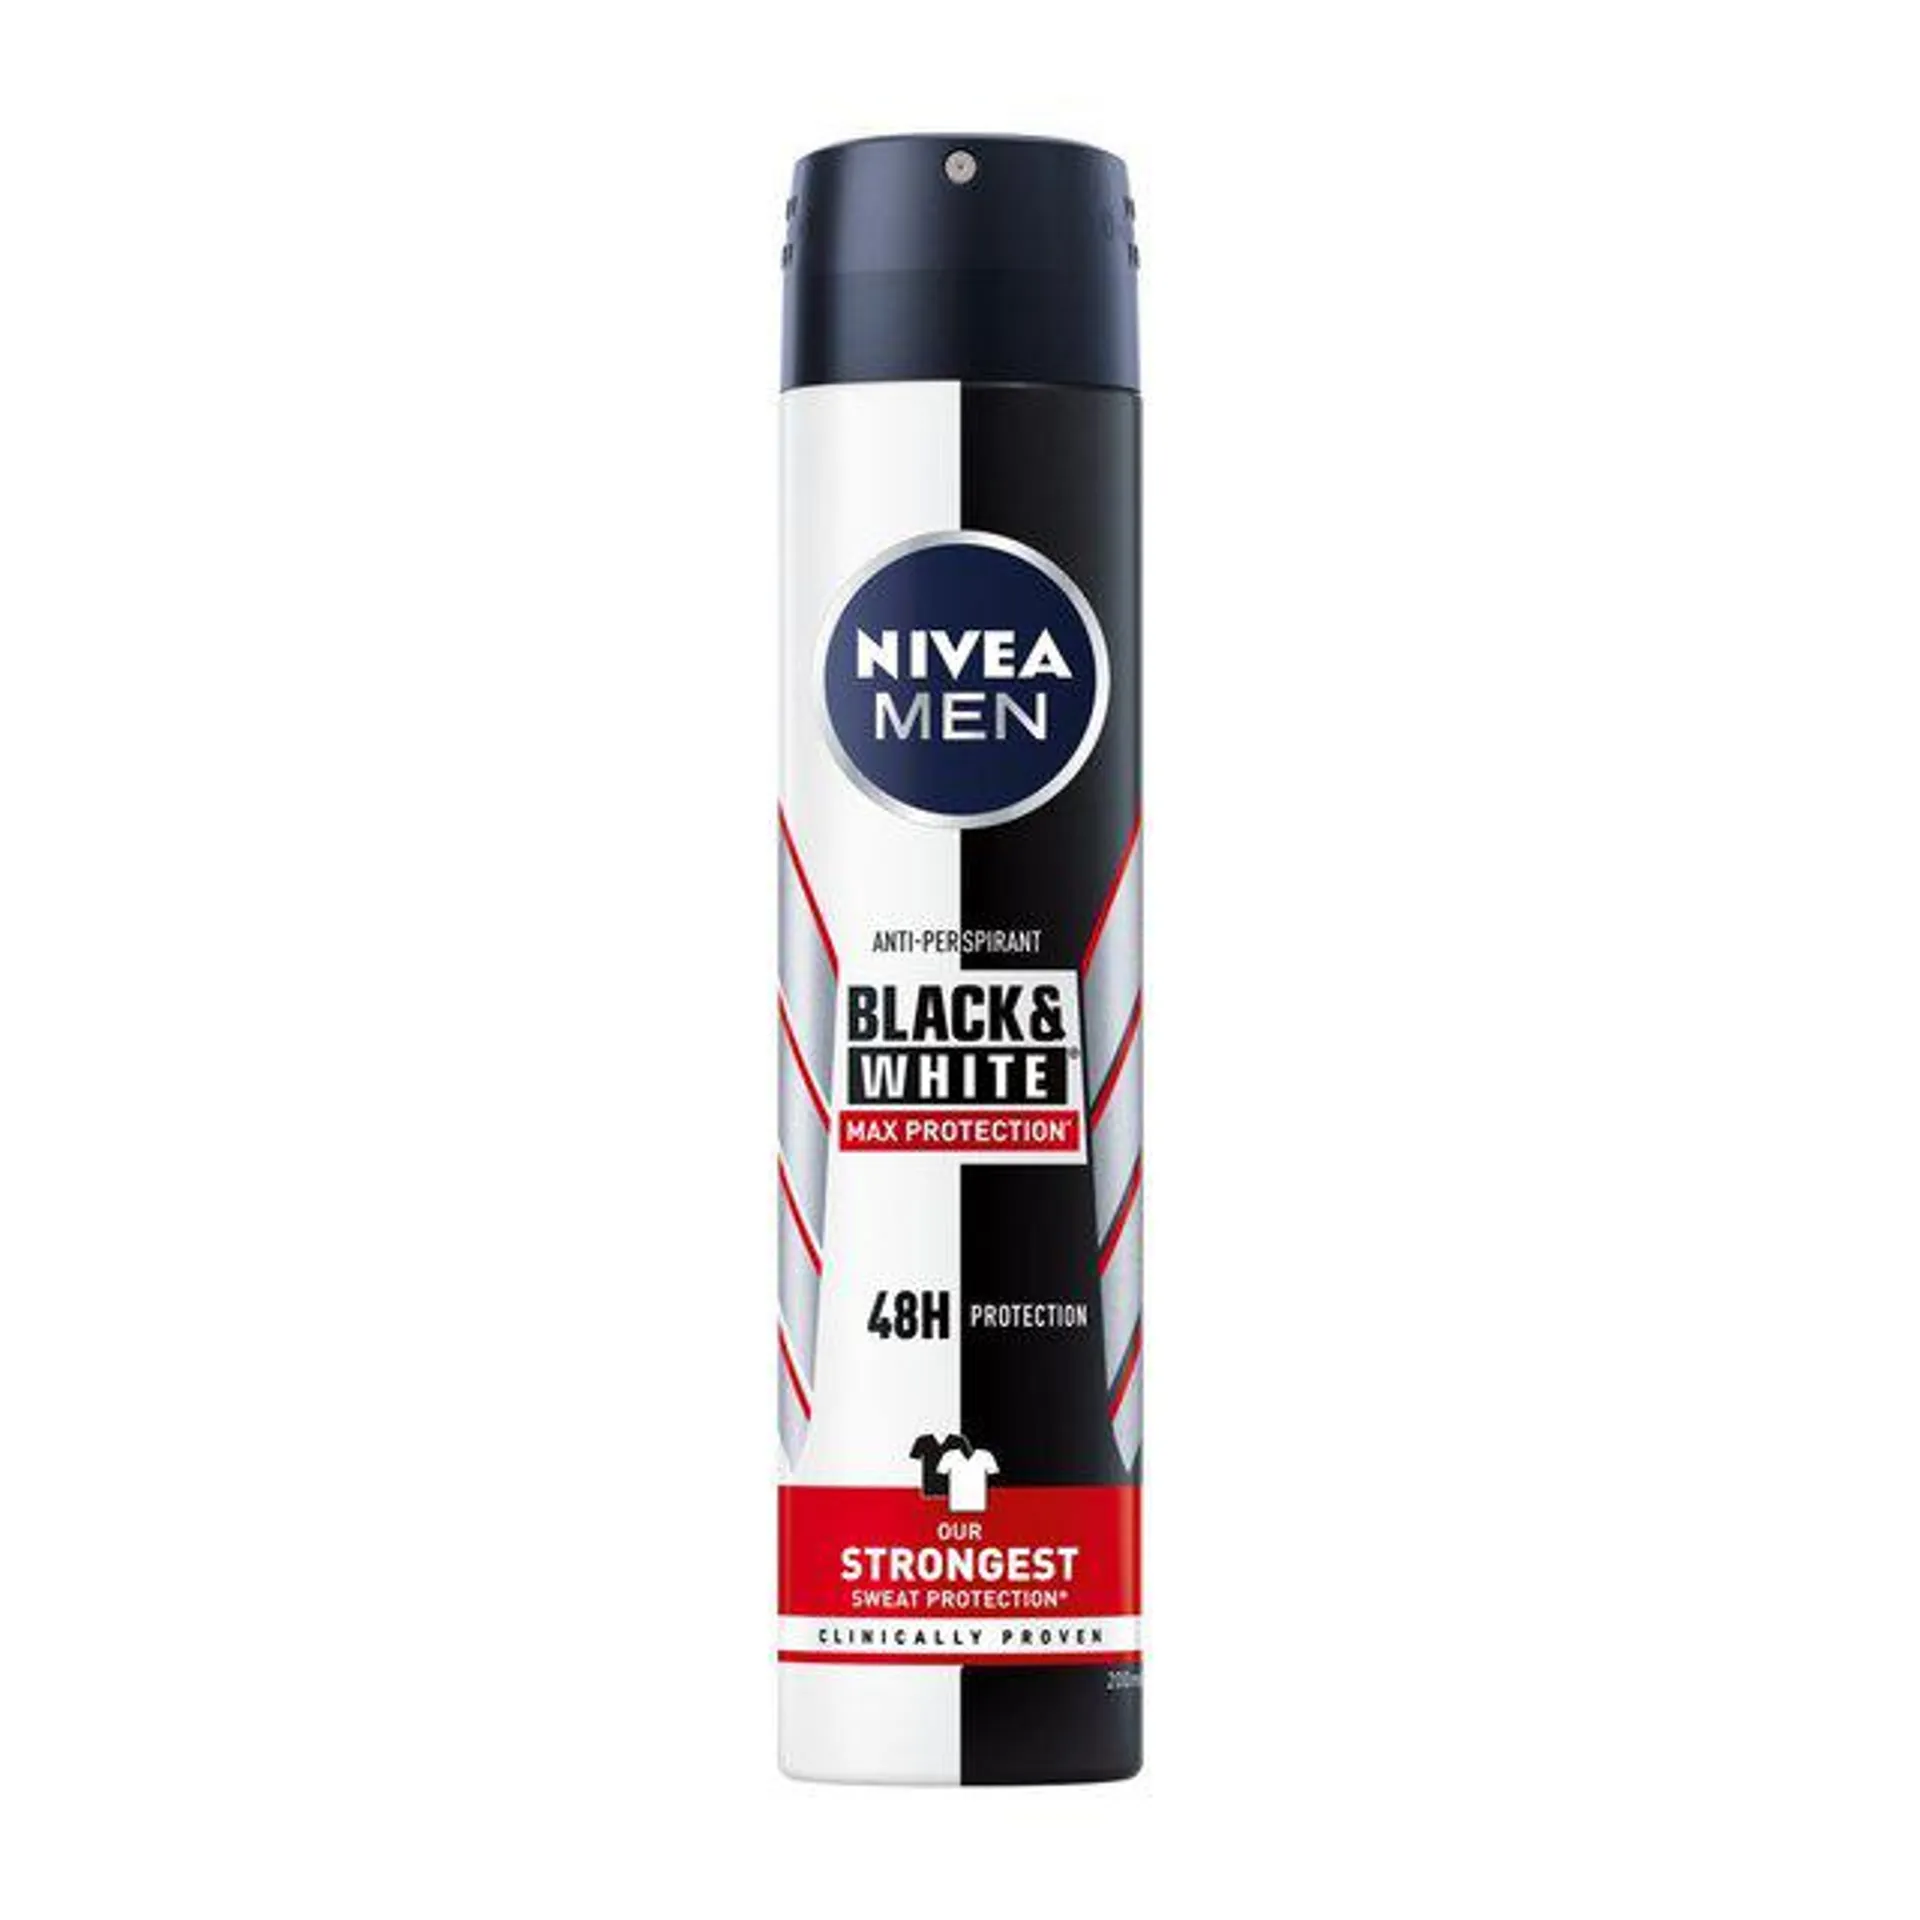 NIVEA MEN Black & White Max Protect Anti-Perspirant Deodorant Spray 200ml